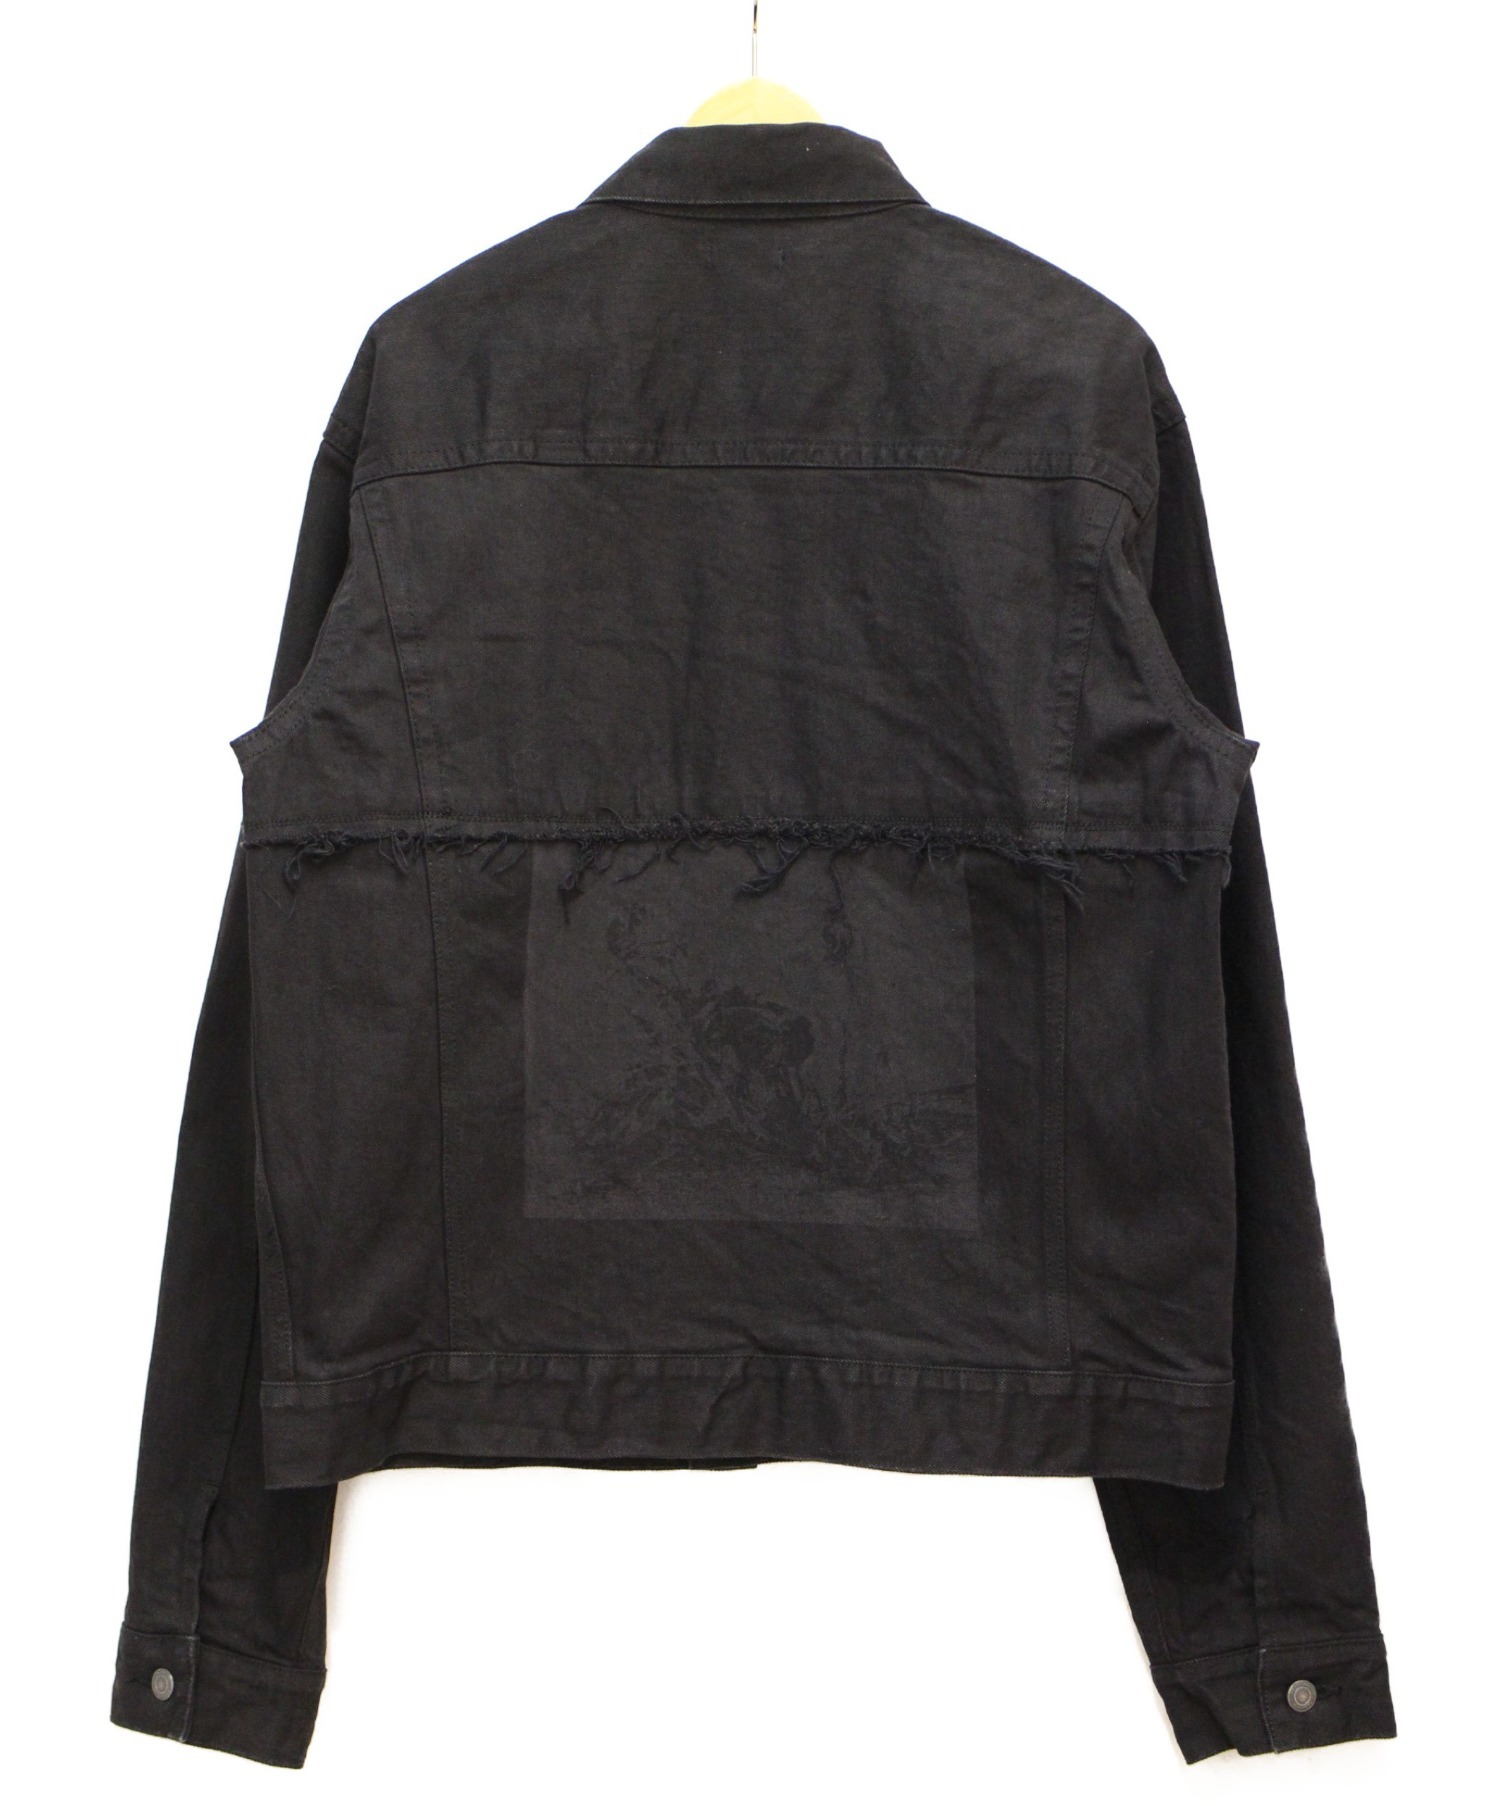 CHRISTIAN DADA (クリスチャンダダ) 19SS Laser Print Denim jacket ブラック サイズ:L